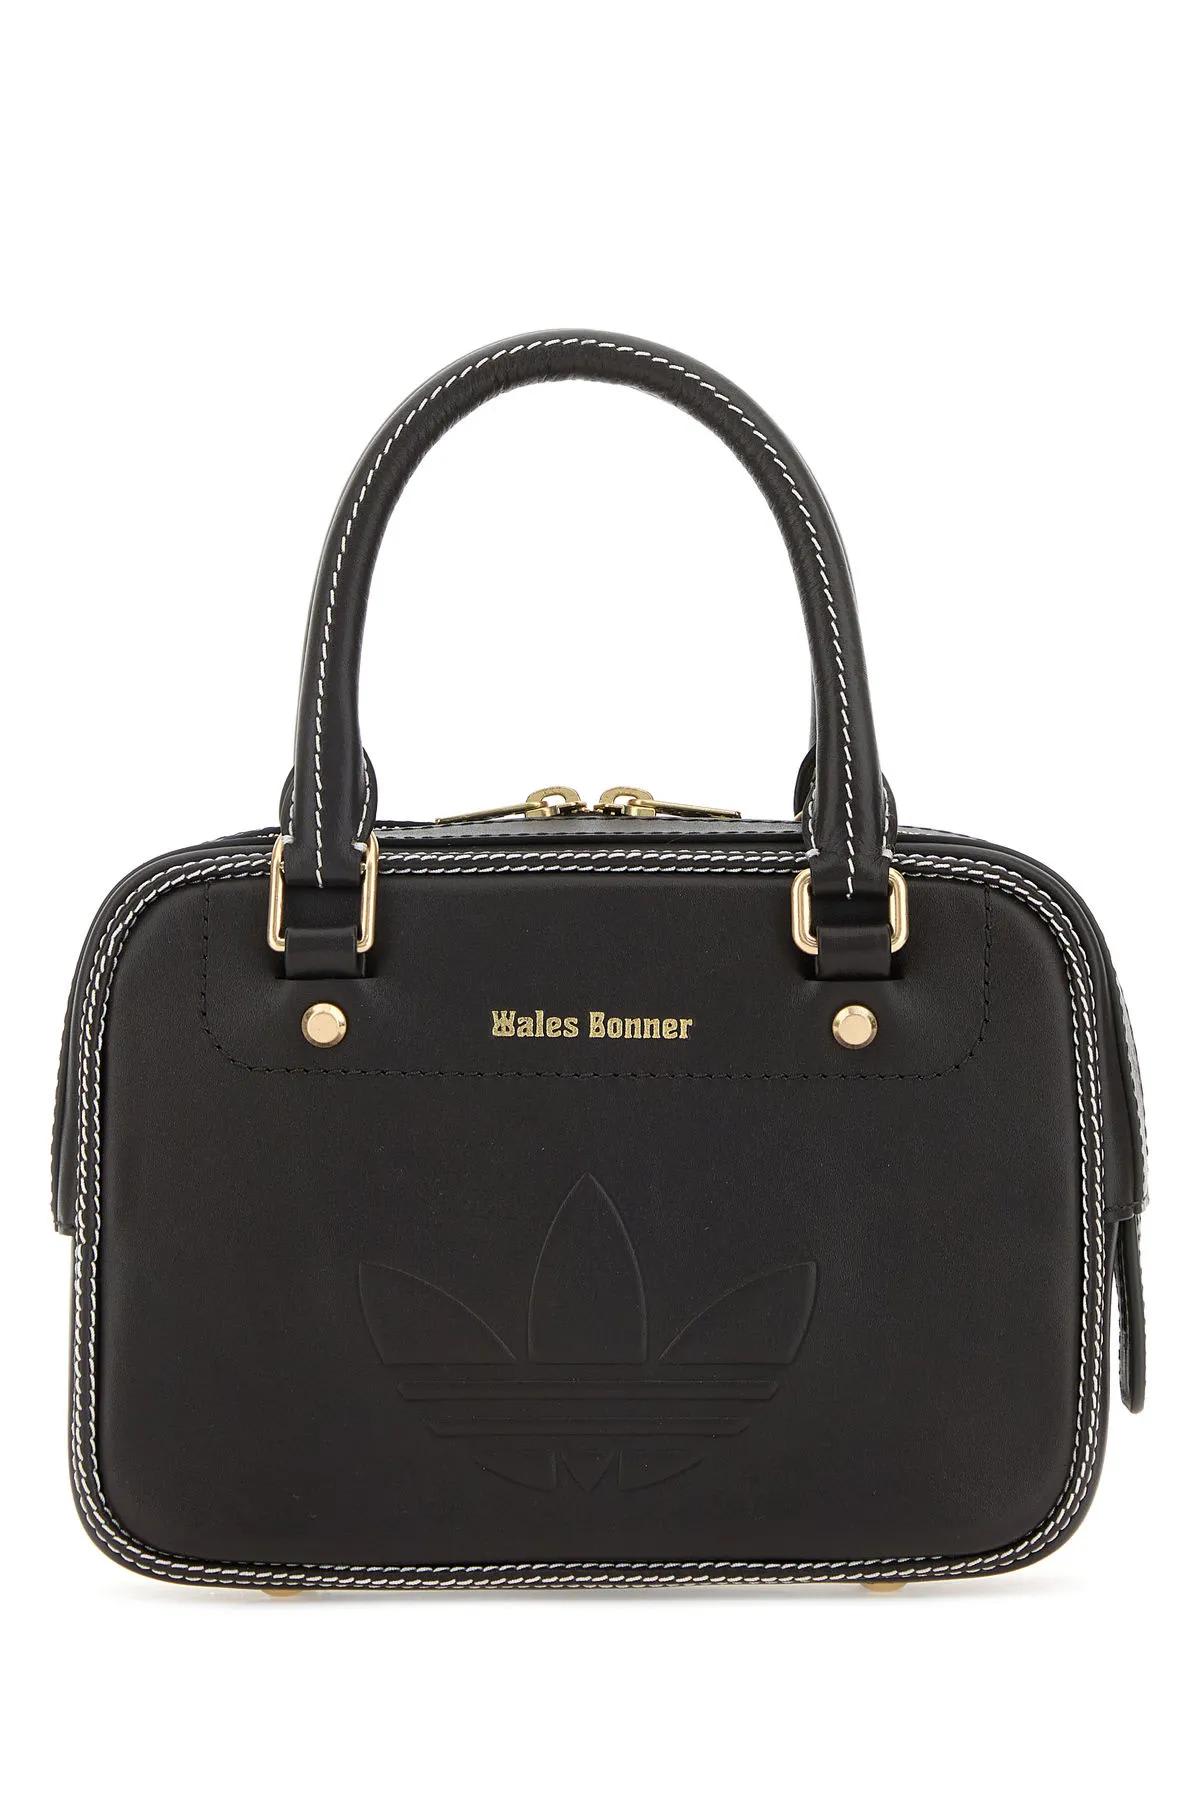 Dark Brown Leather X Wales Bonner Handbag